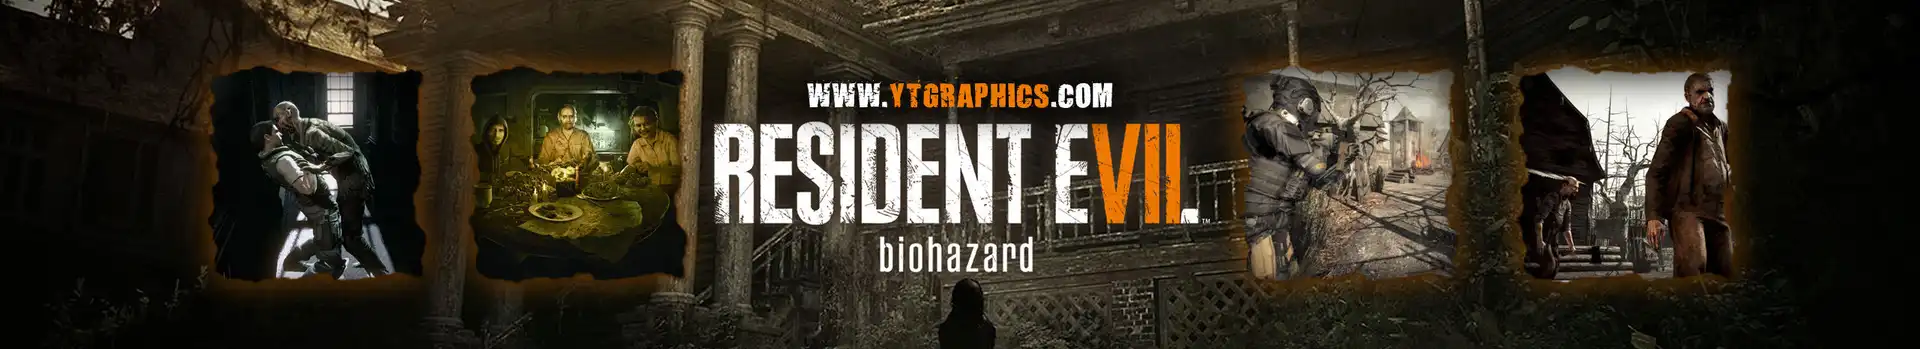 Resident Evil 7: Biohazard preview